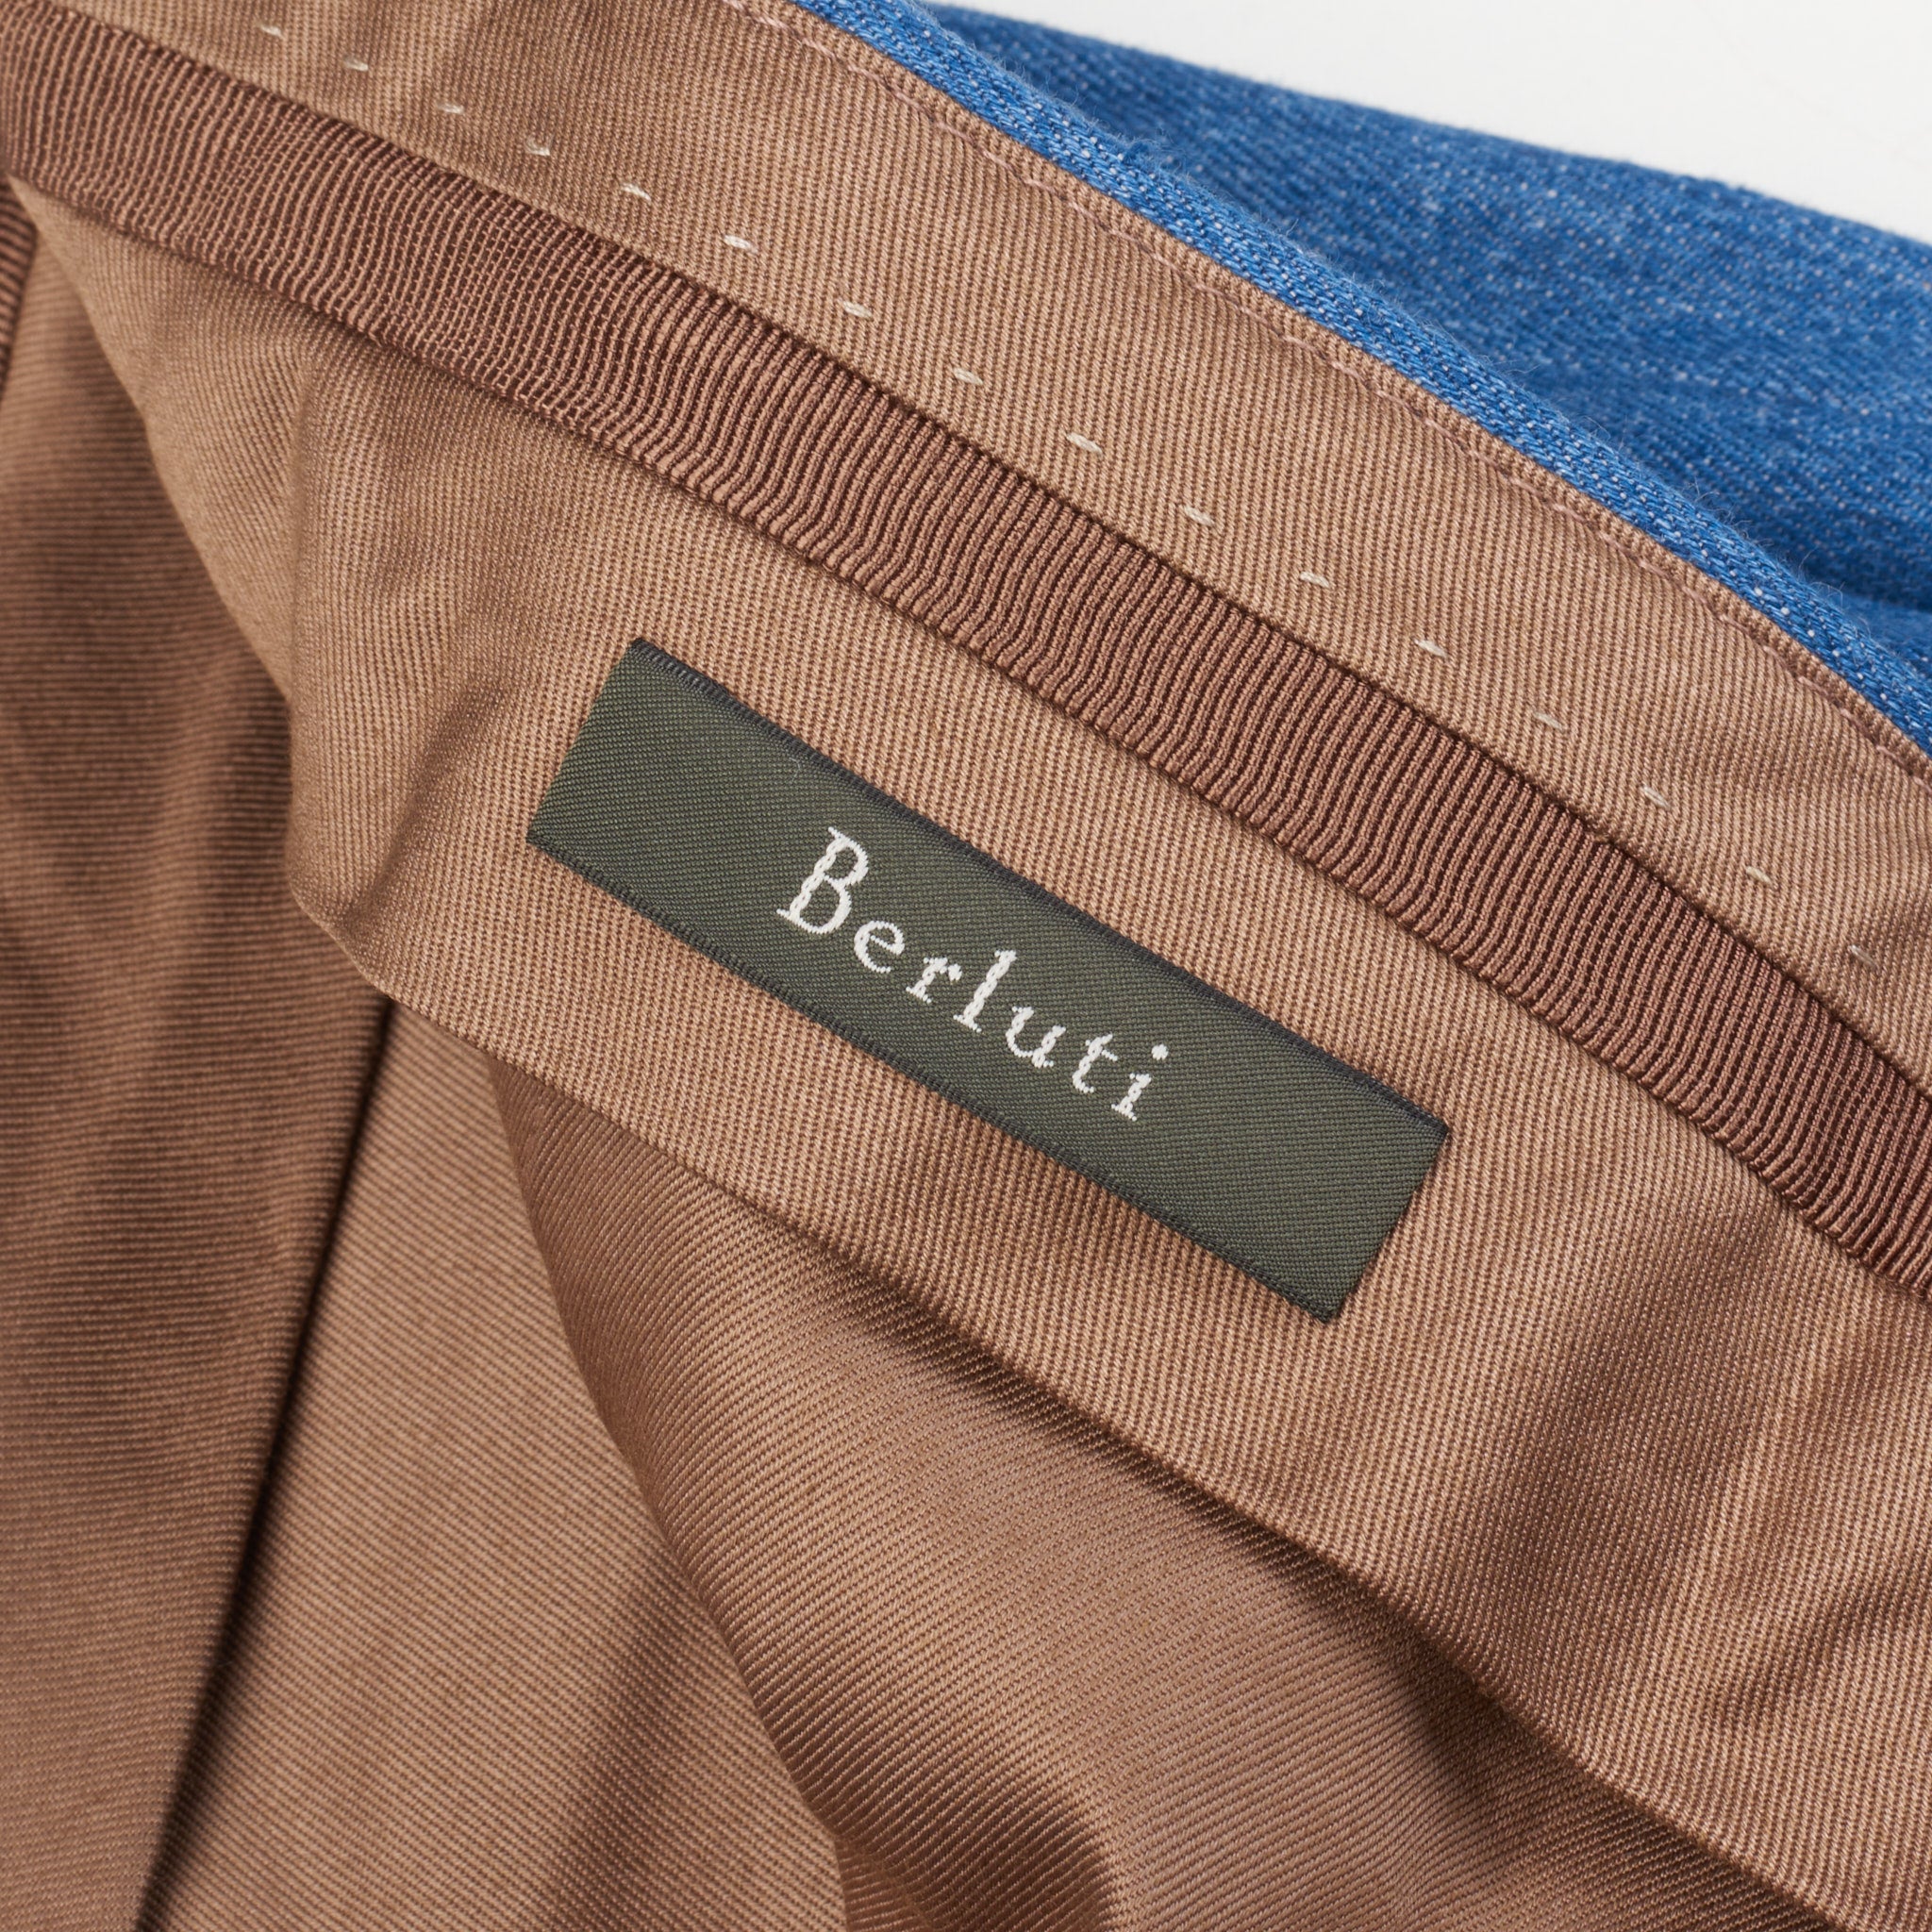 BERLUTI Paris Blue Linen-Cotton Denim Flat Front Slim Fit Officer's Pants EU 52 US 36 BERLUTI